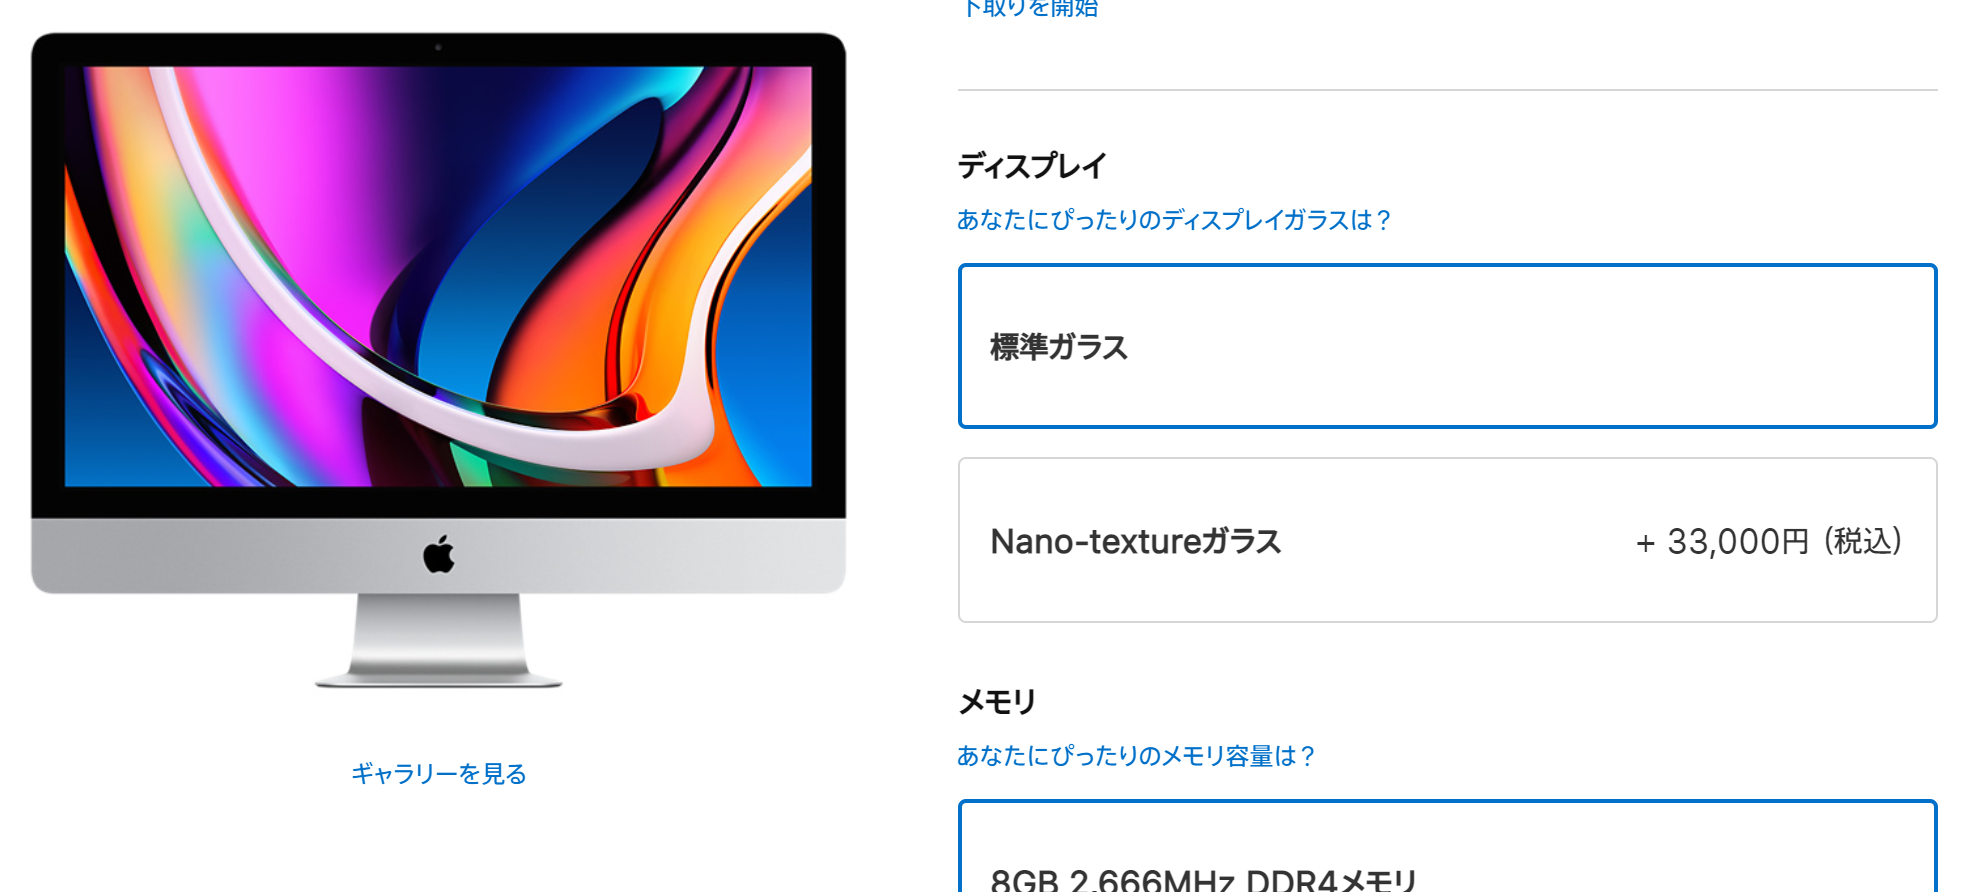 iMac 値下げ対応 (21.5-inch, Mid 2014)